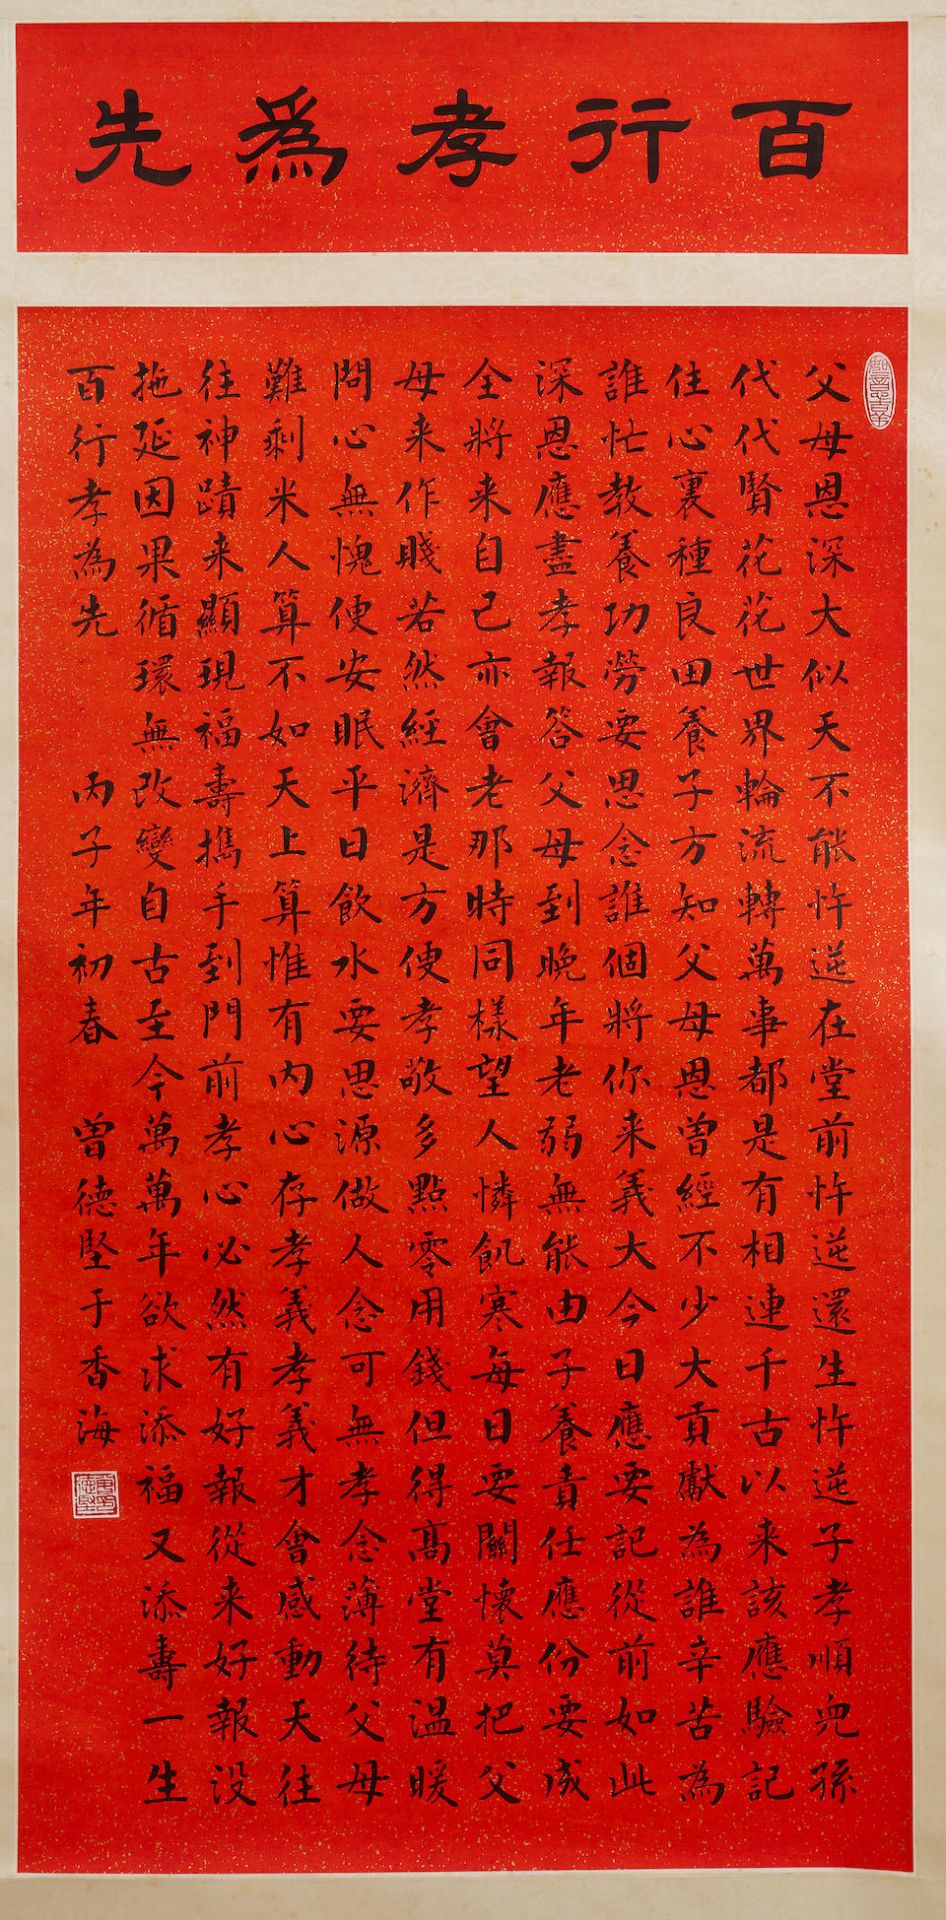 Zeng Dejian (20th century) Calligraphy in Regular style